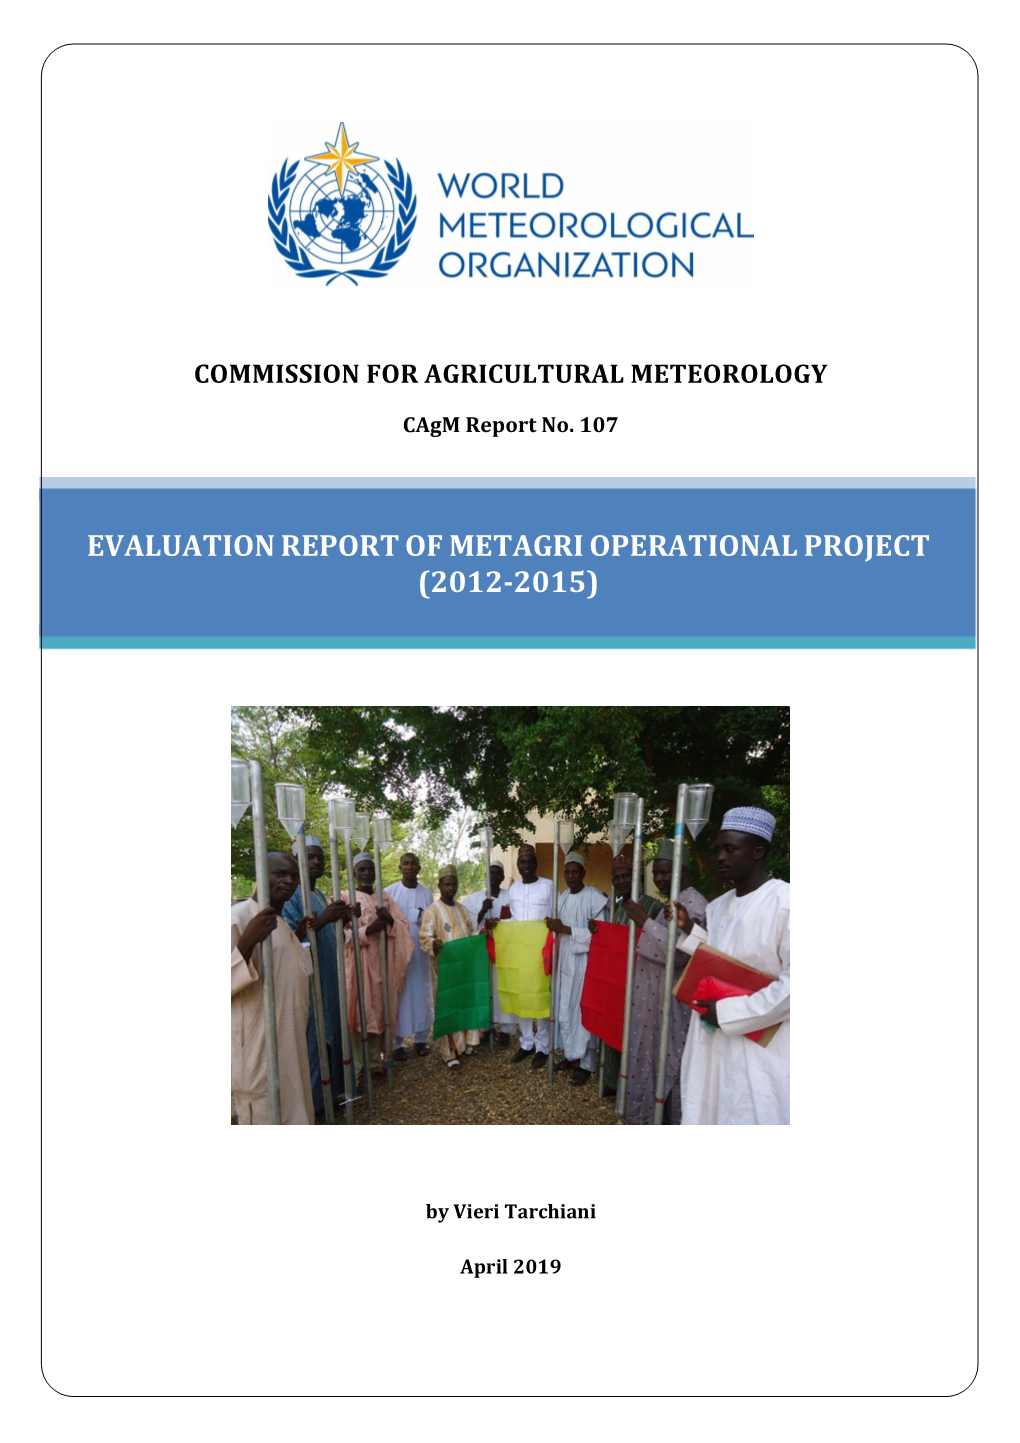 Cagm Report, 107. Evaluation Report of METAGRI